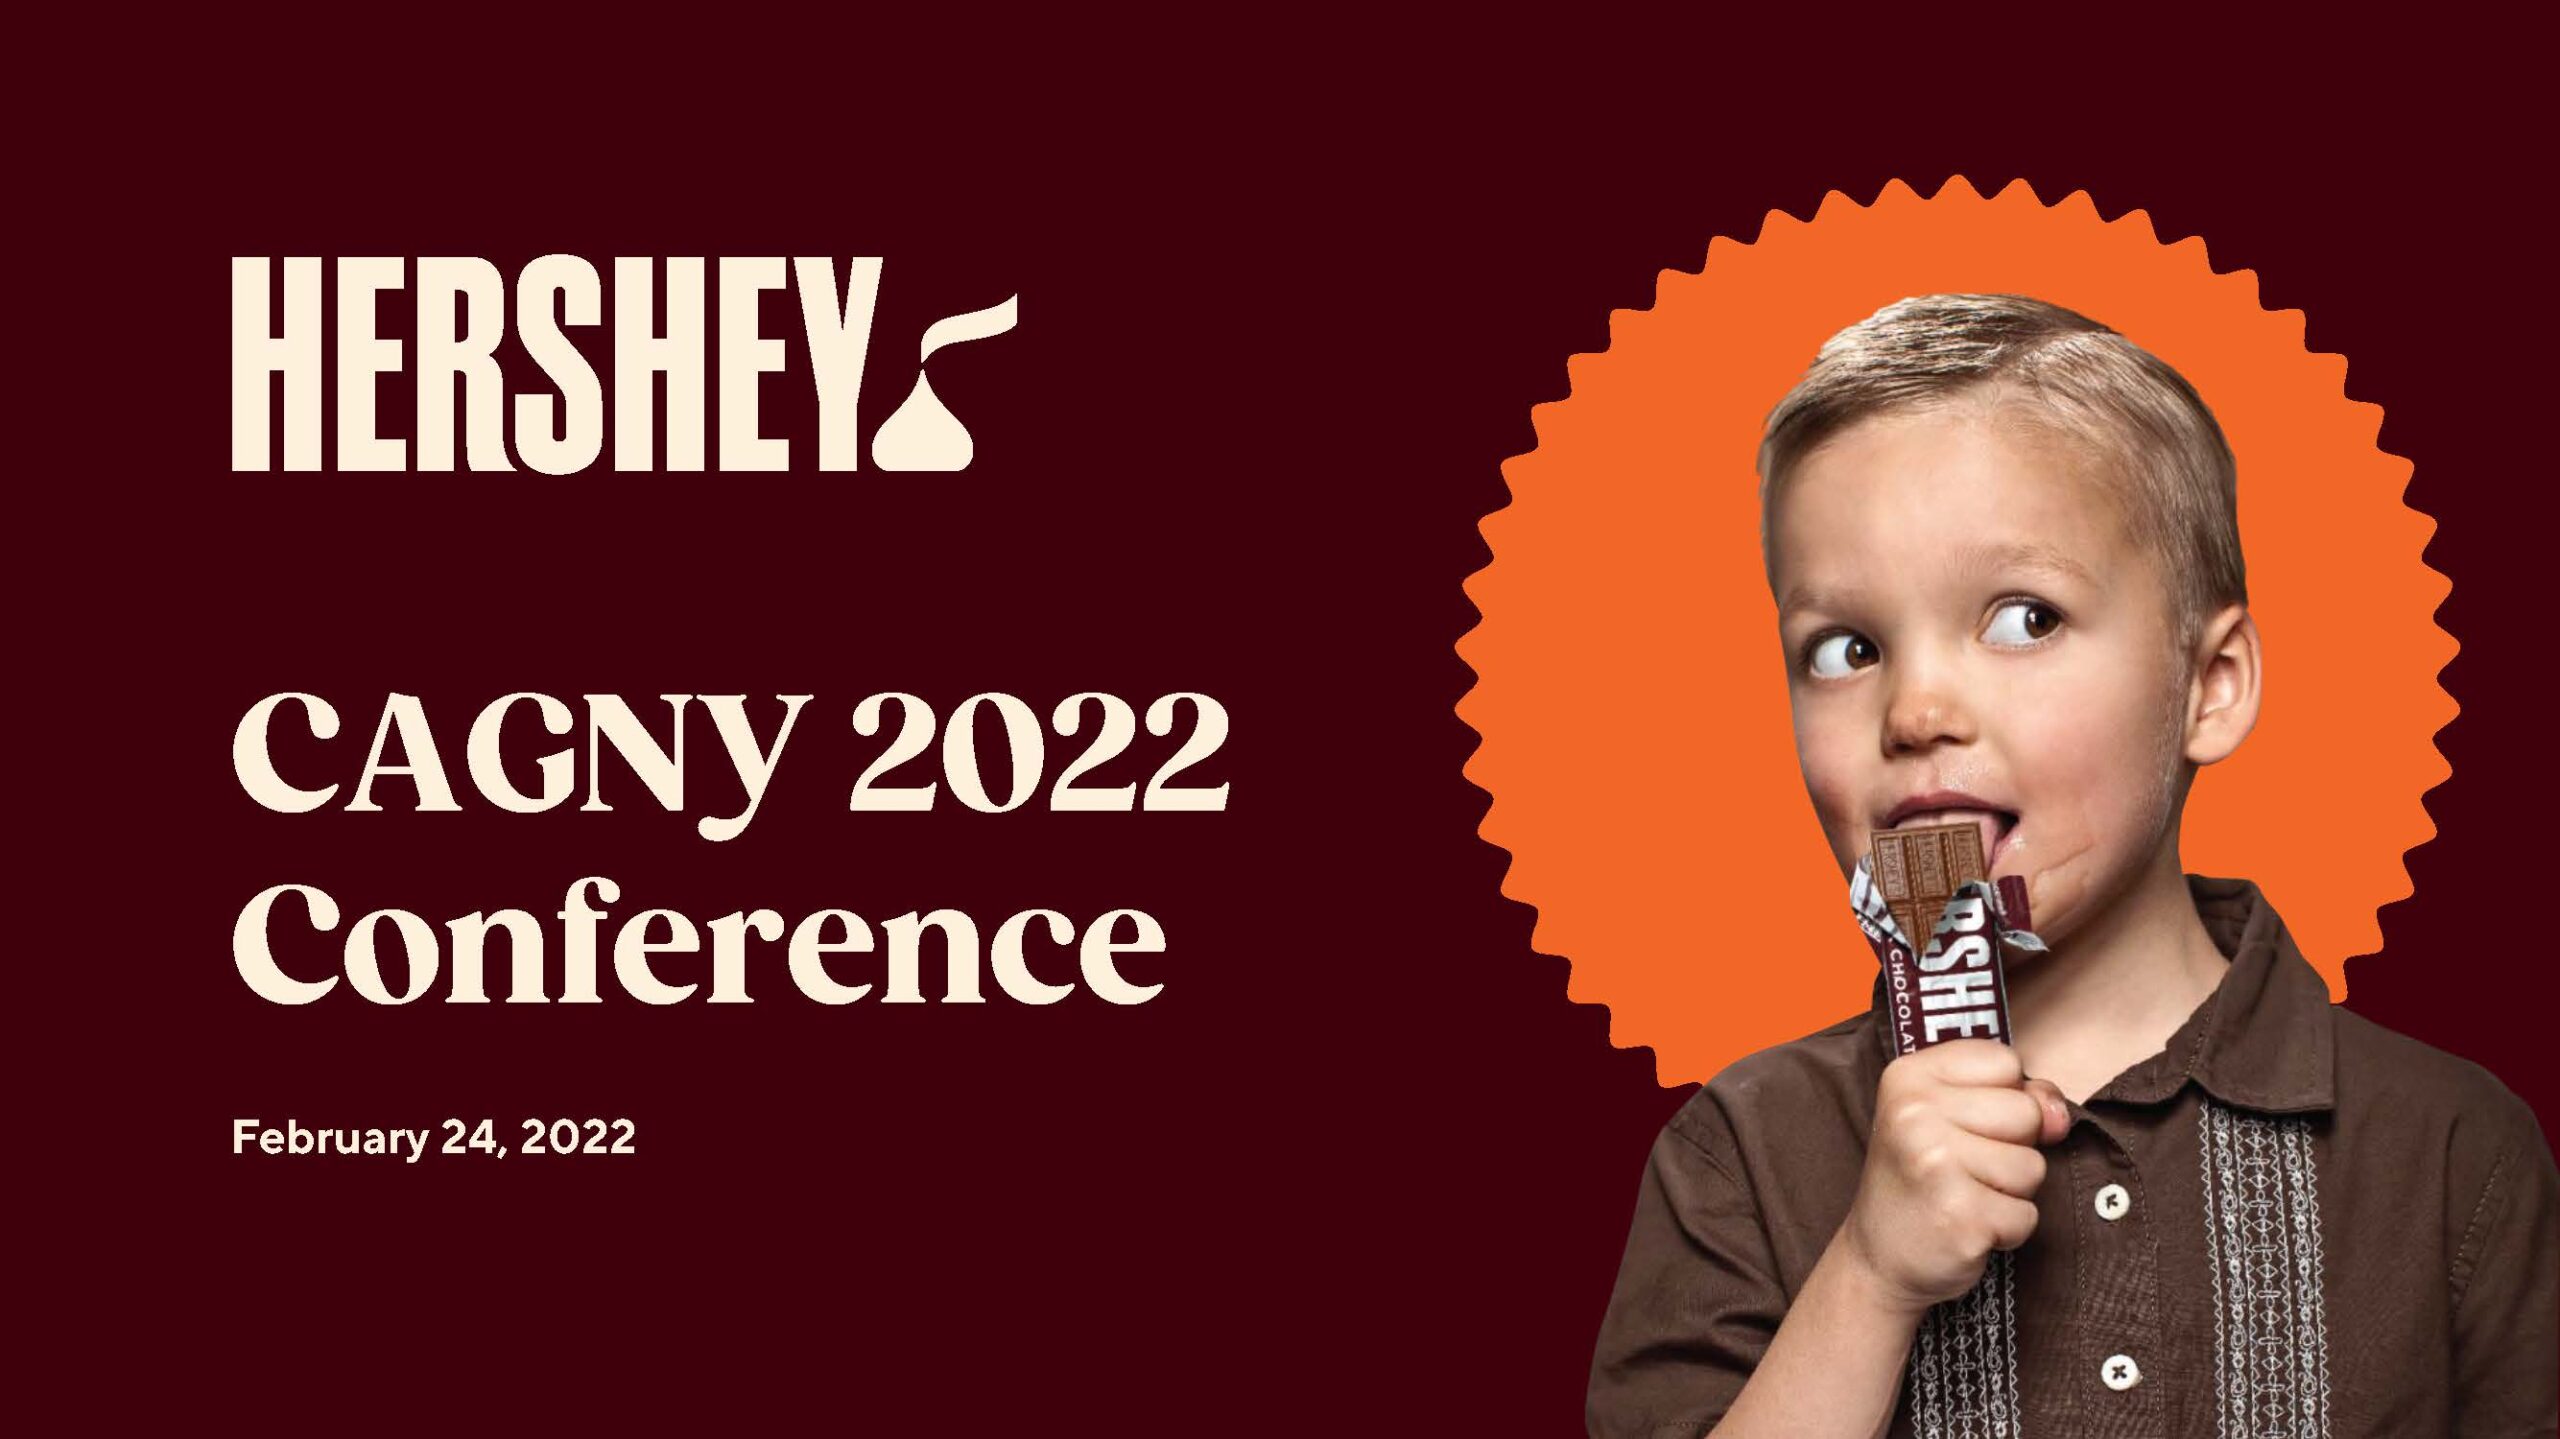 Investor Relations Presentation Design for Hershey 2022